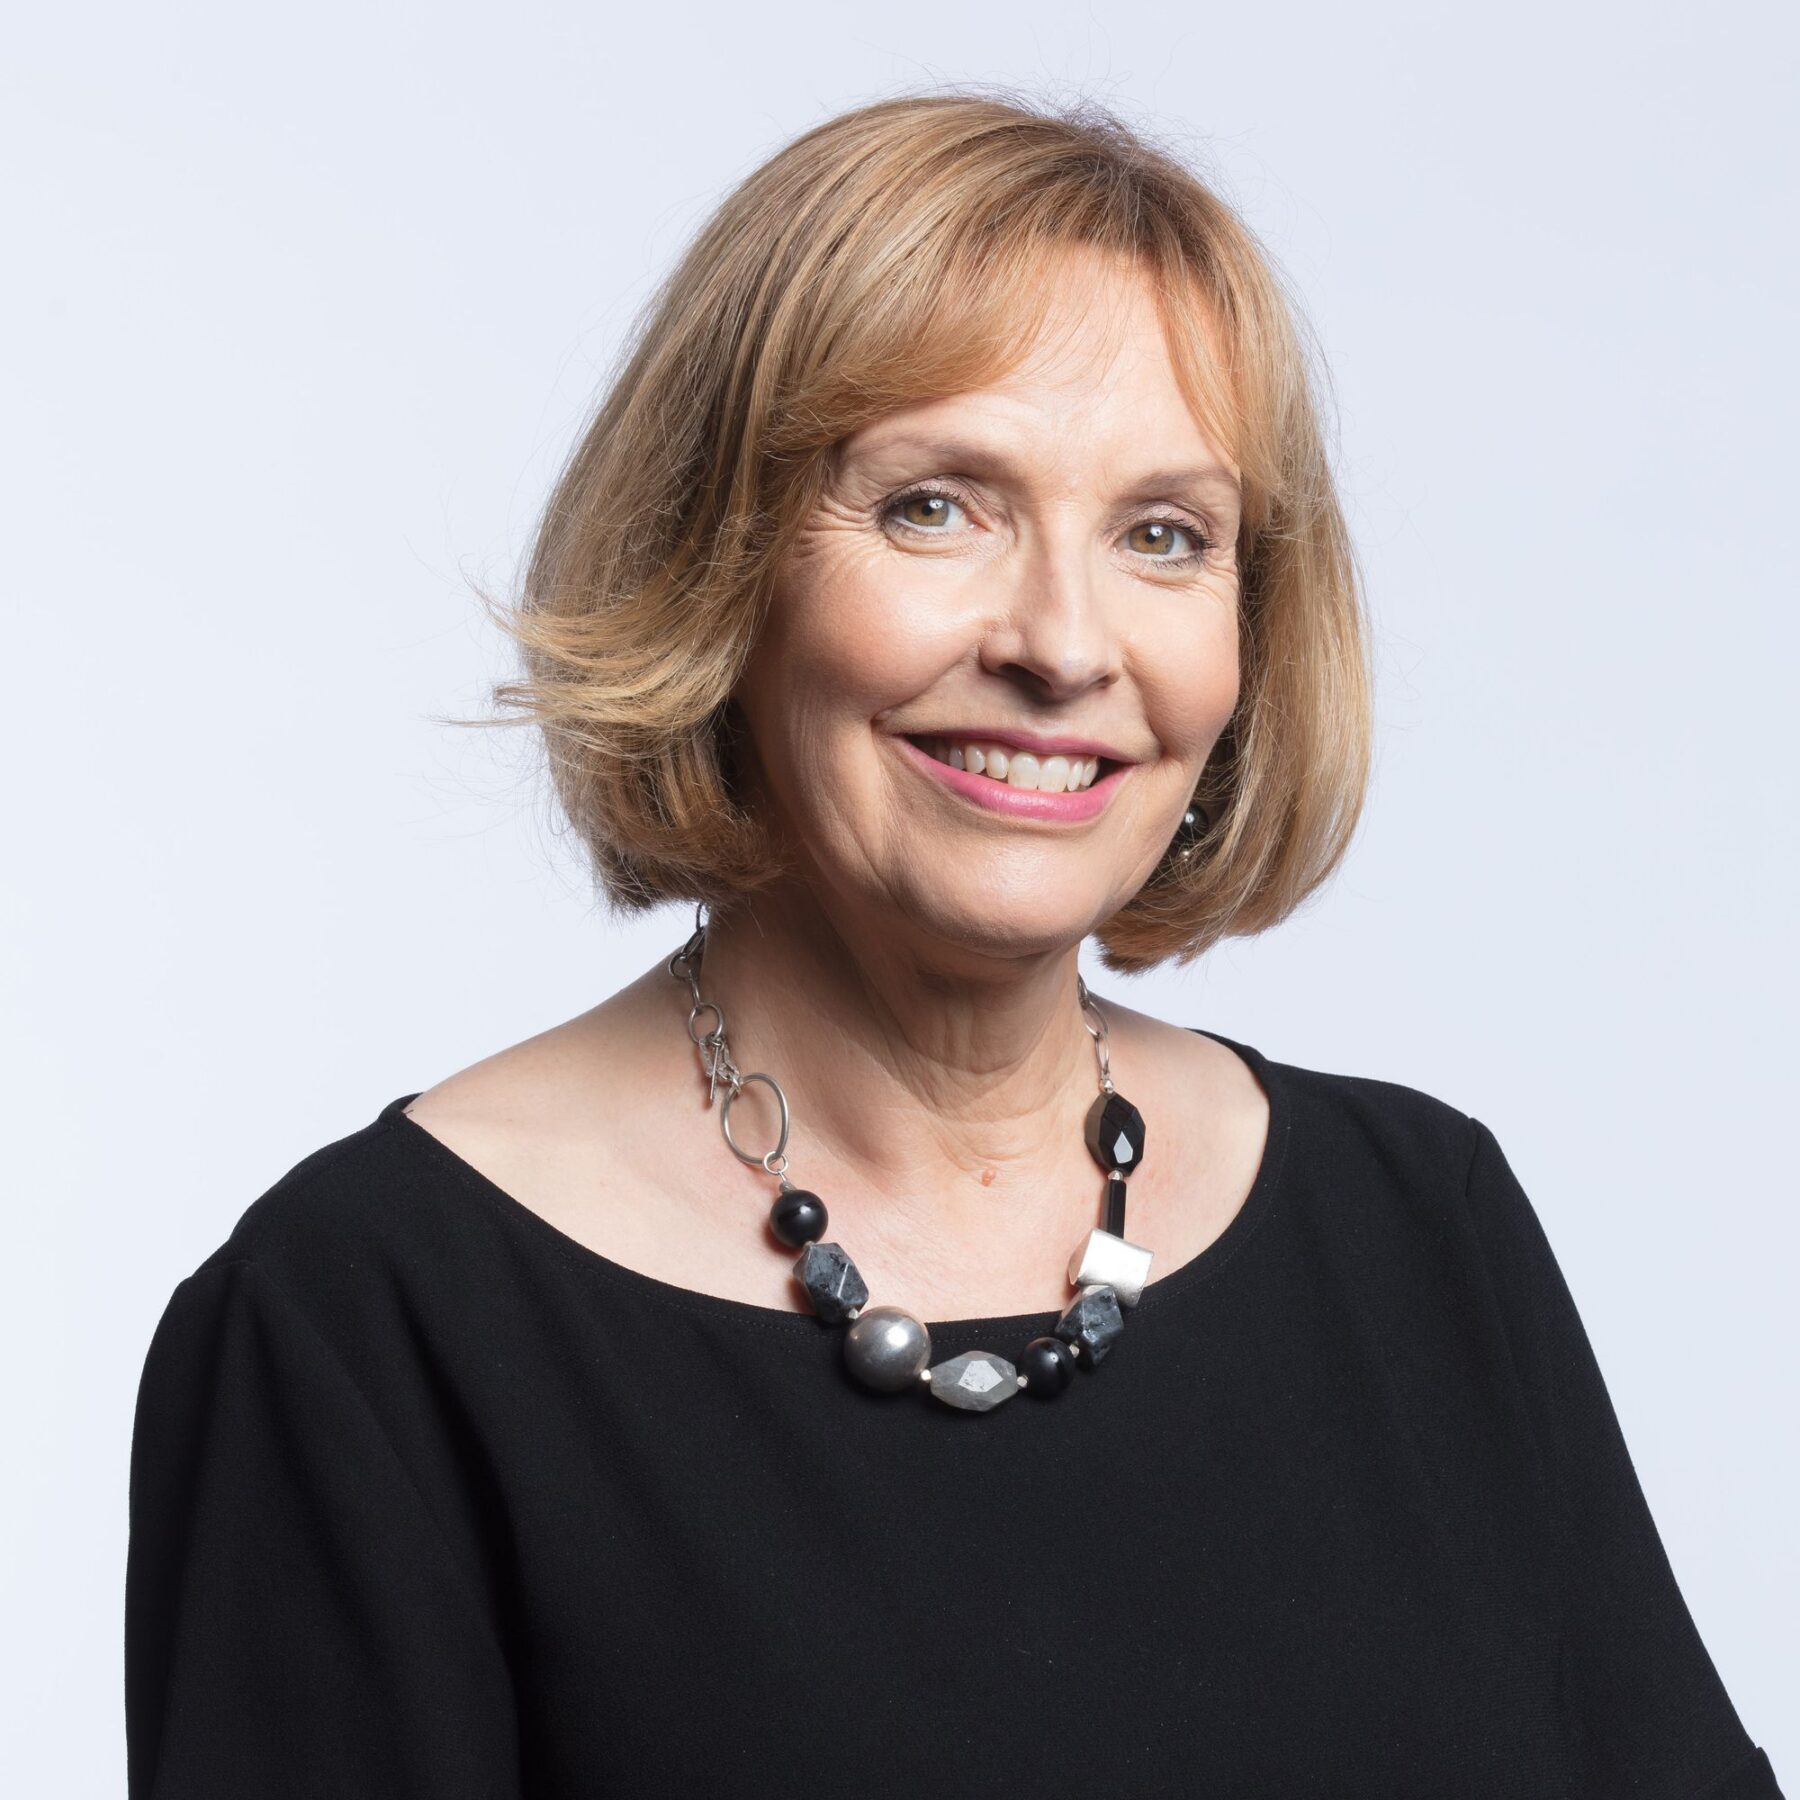 Julia Davison, Goodstart Early Learning’s former CEO